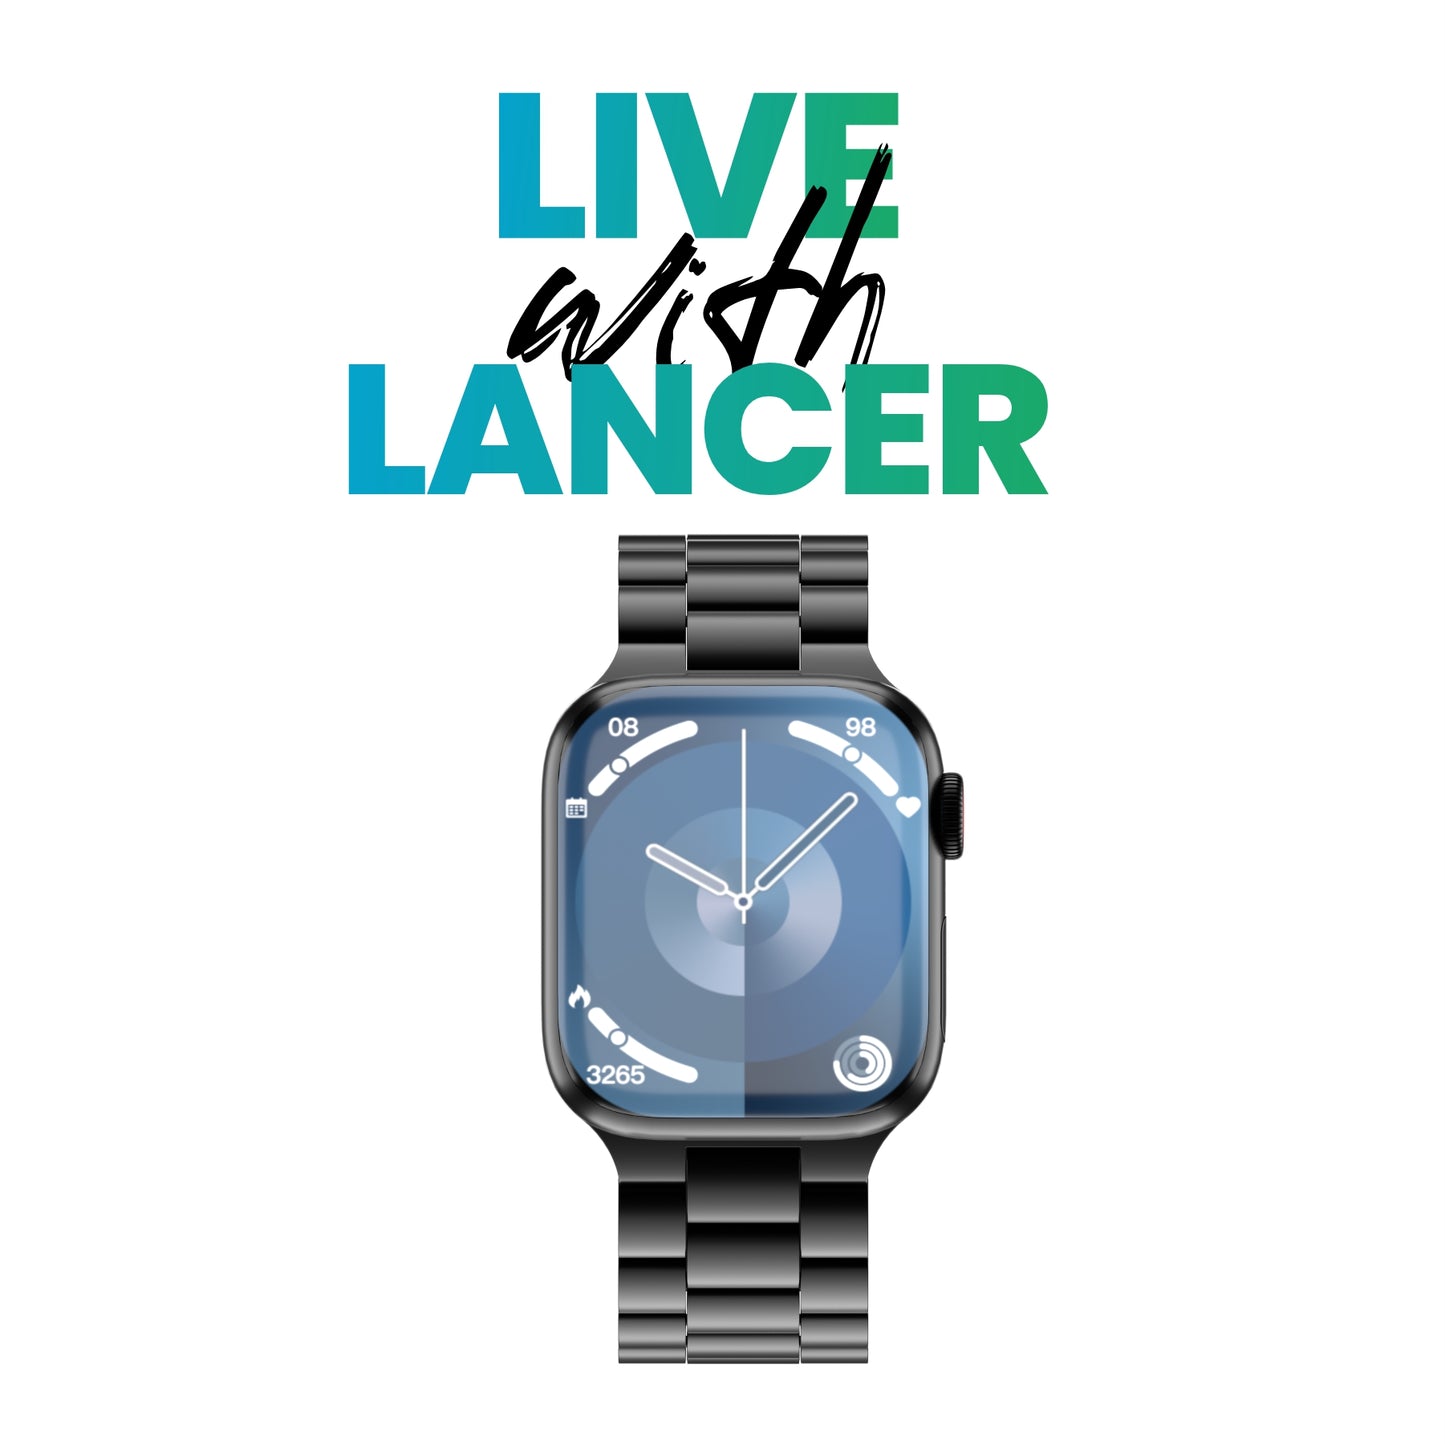 LYNE Lancer 16 Smart Watch 2.1" TFT Screen, Bluetooth Calling & IP65 Water Resistance